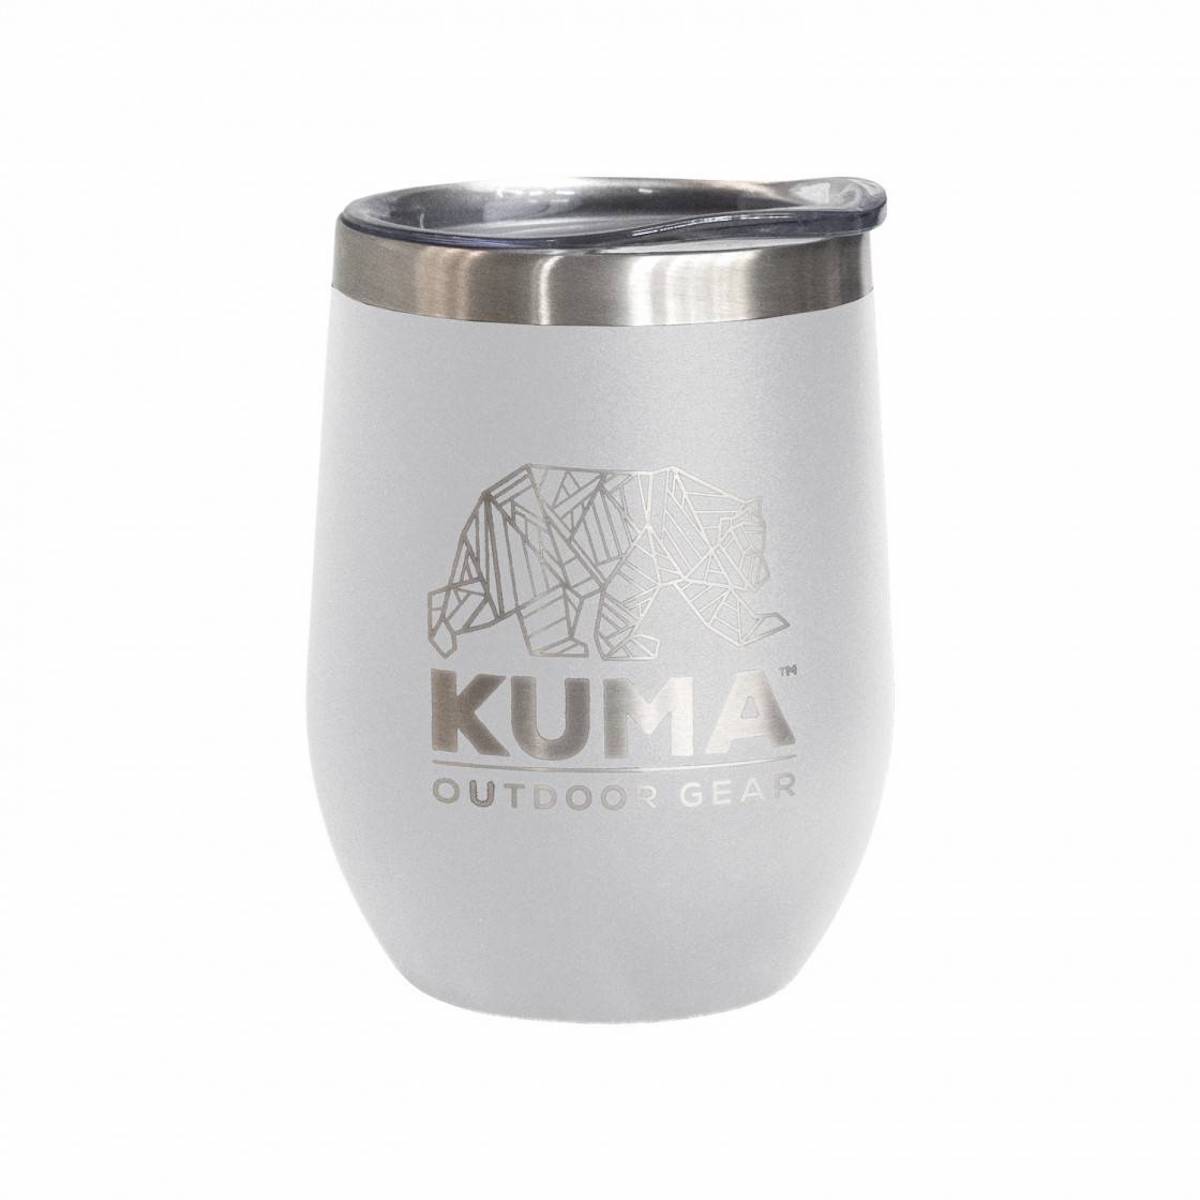 Kuma Wine Tumbler - White